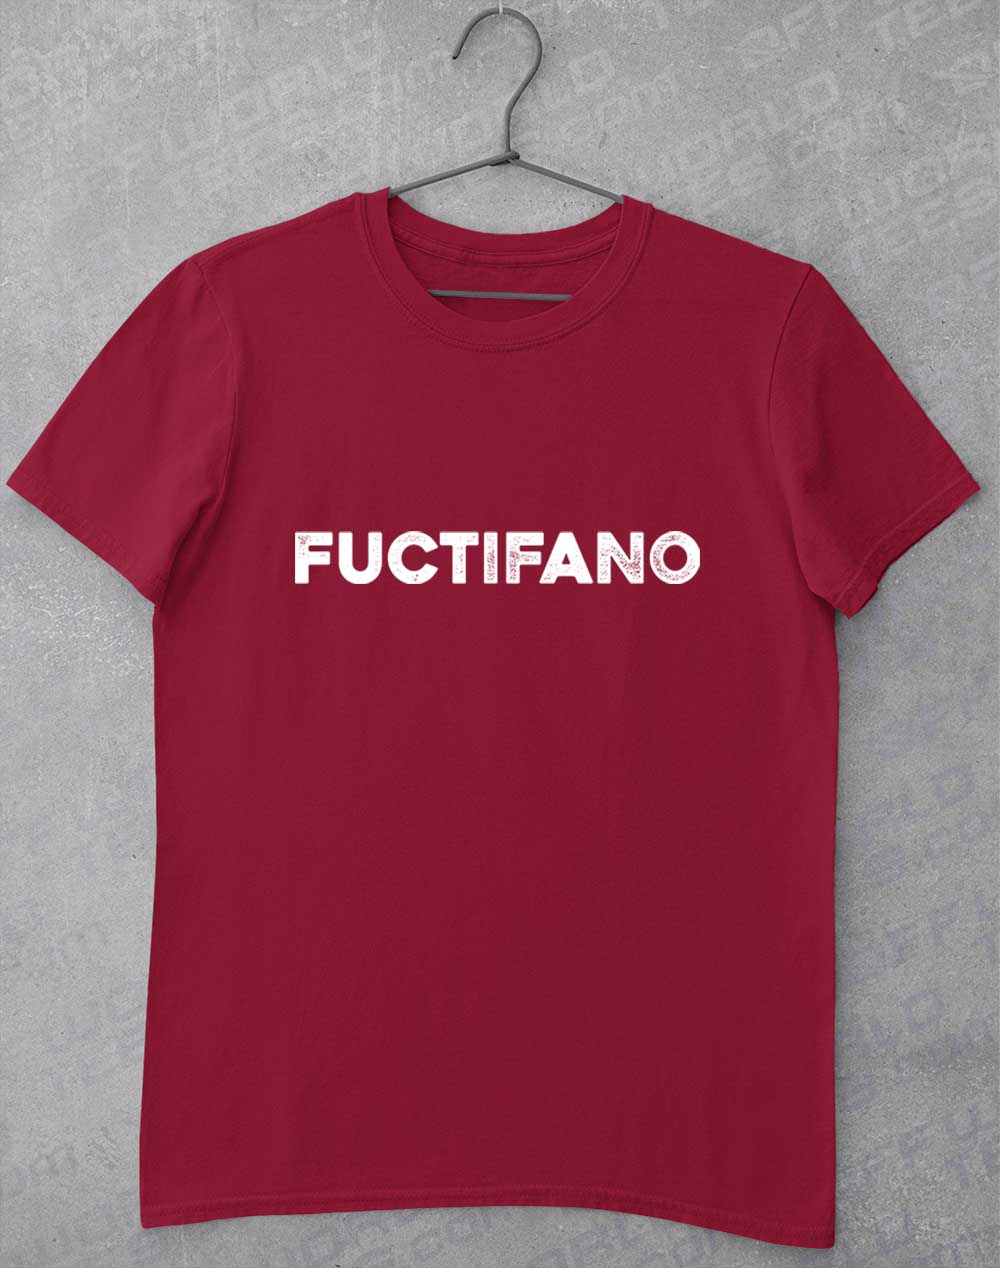 Cardinal Red - Fuctifano T-Shirt